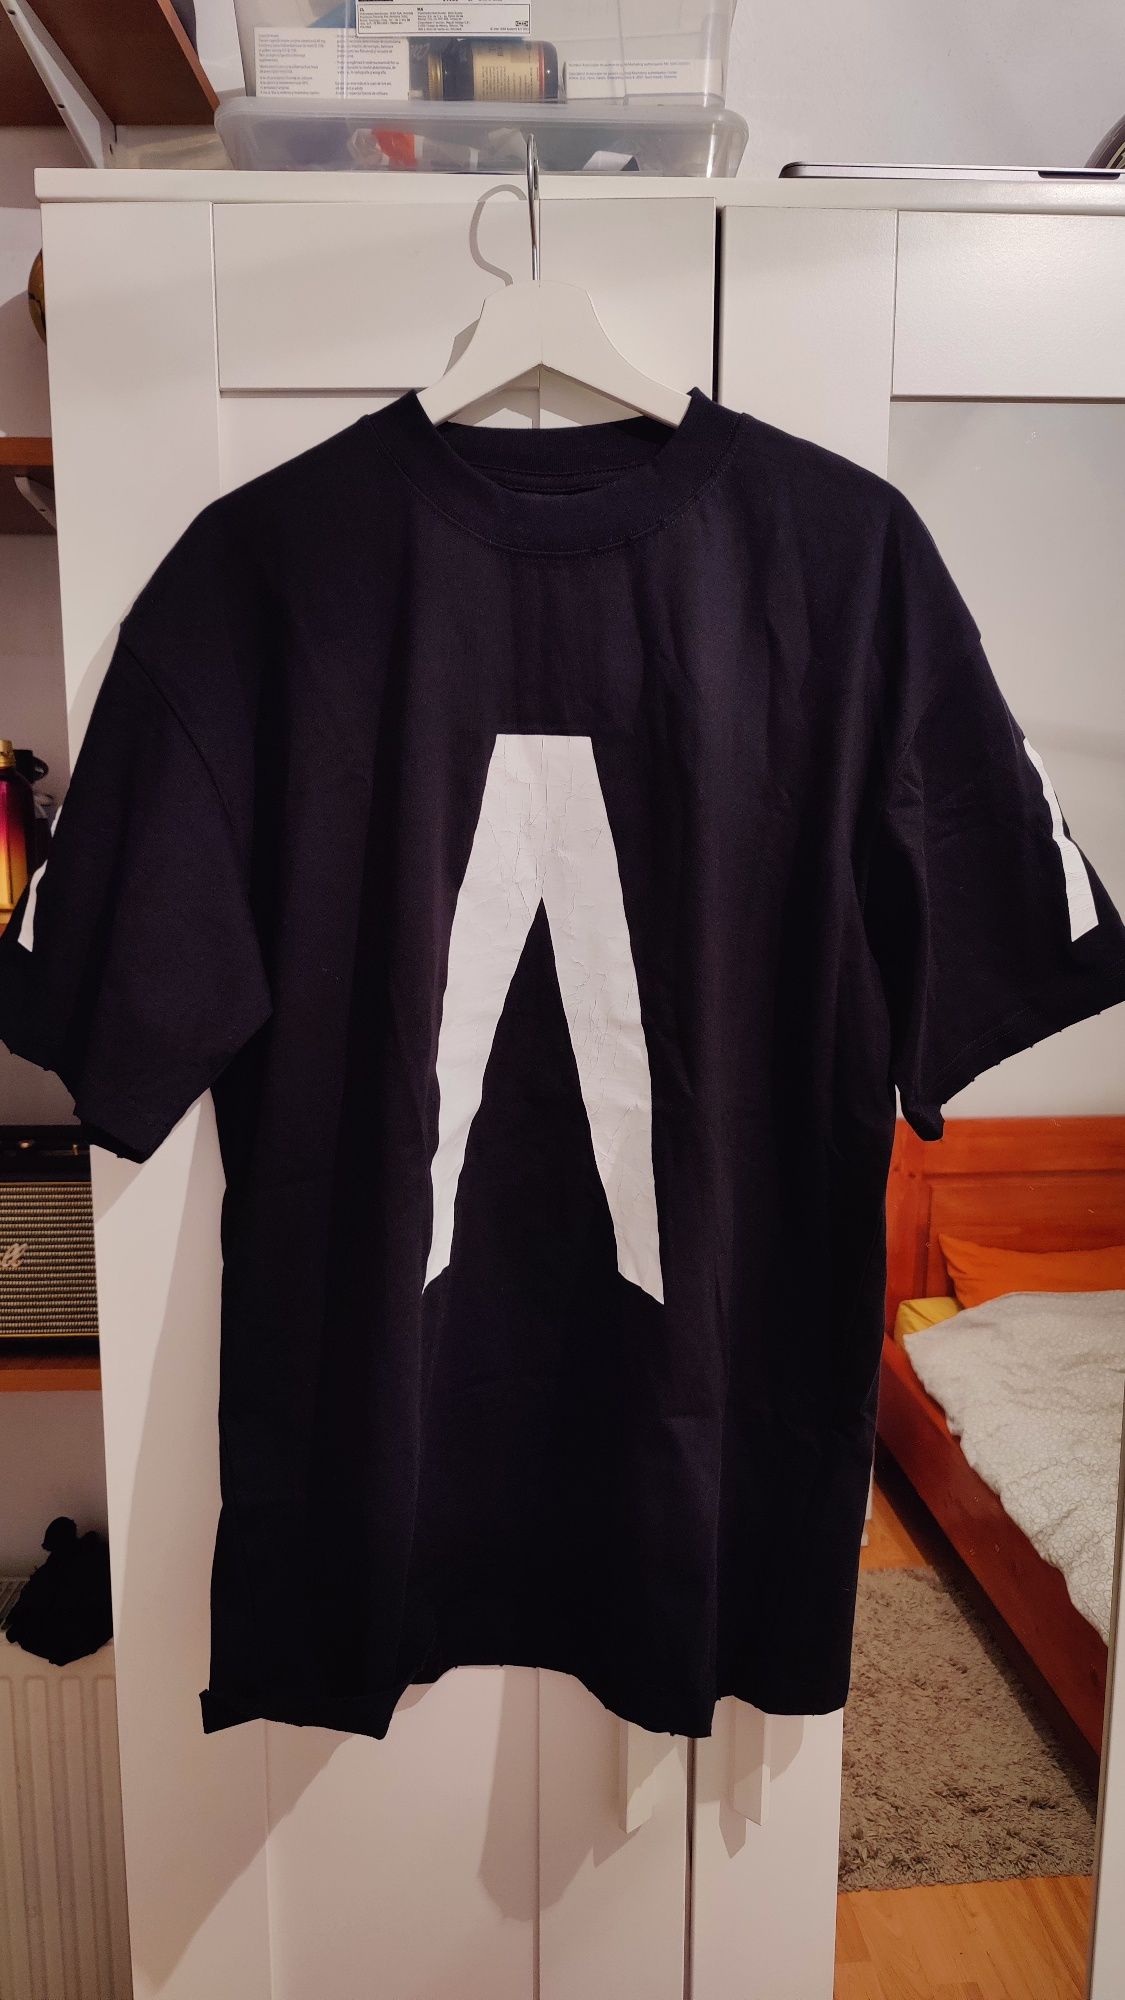 Vand tricou Balenciaga Archive Series Connected cu tag NFC marimea L